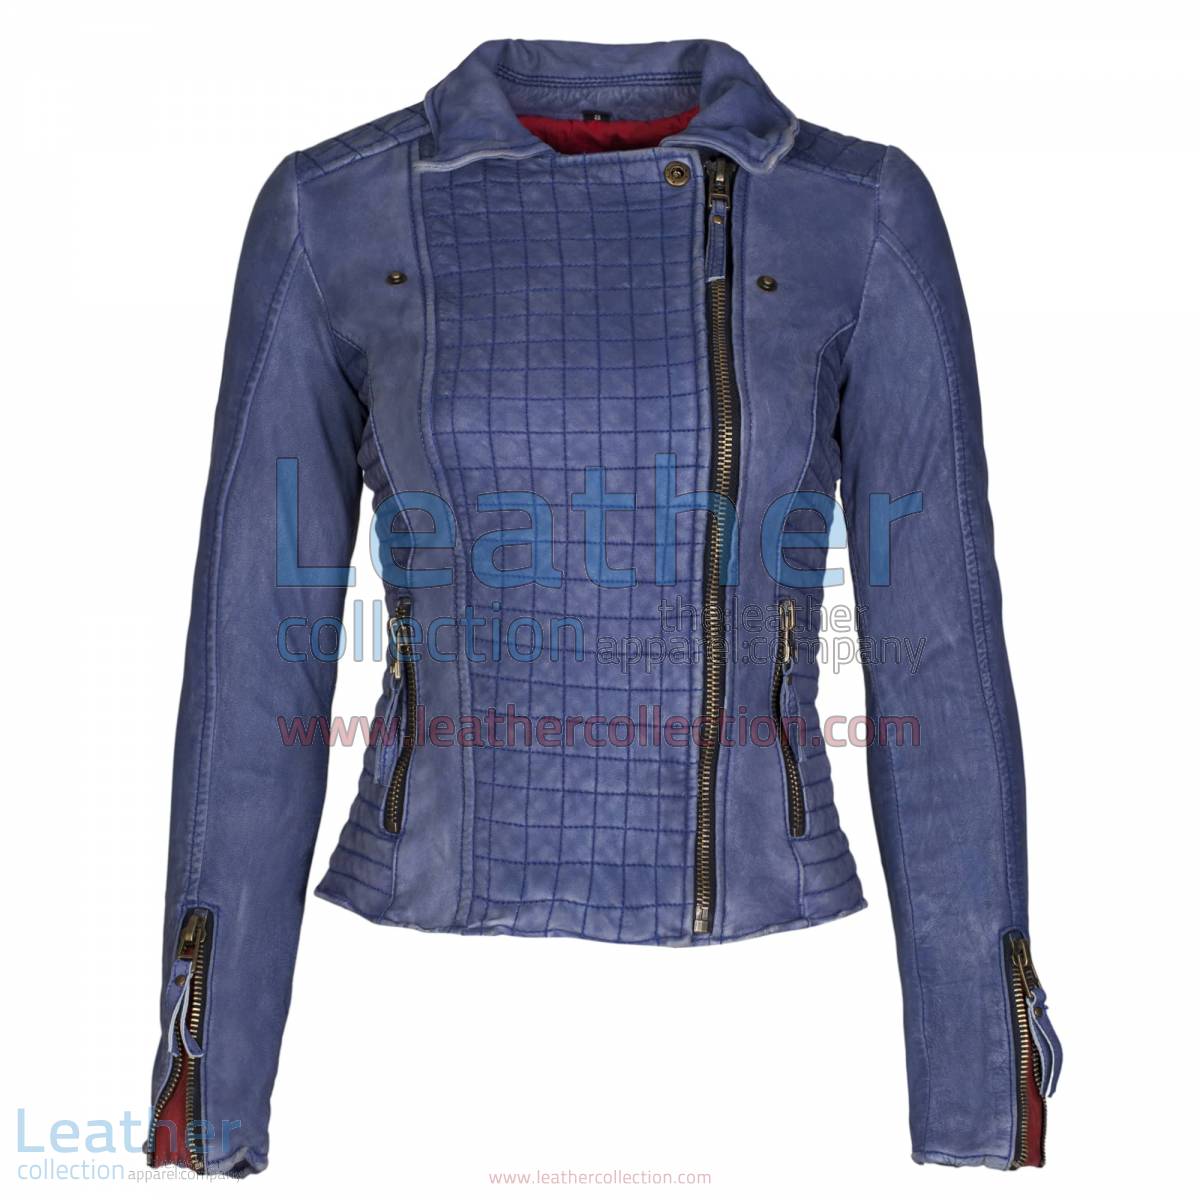 Heritage Ladies Blue Fashion Leather Jacket